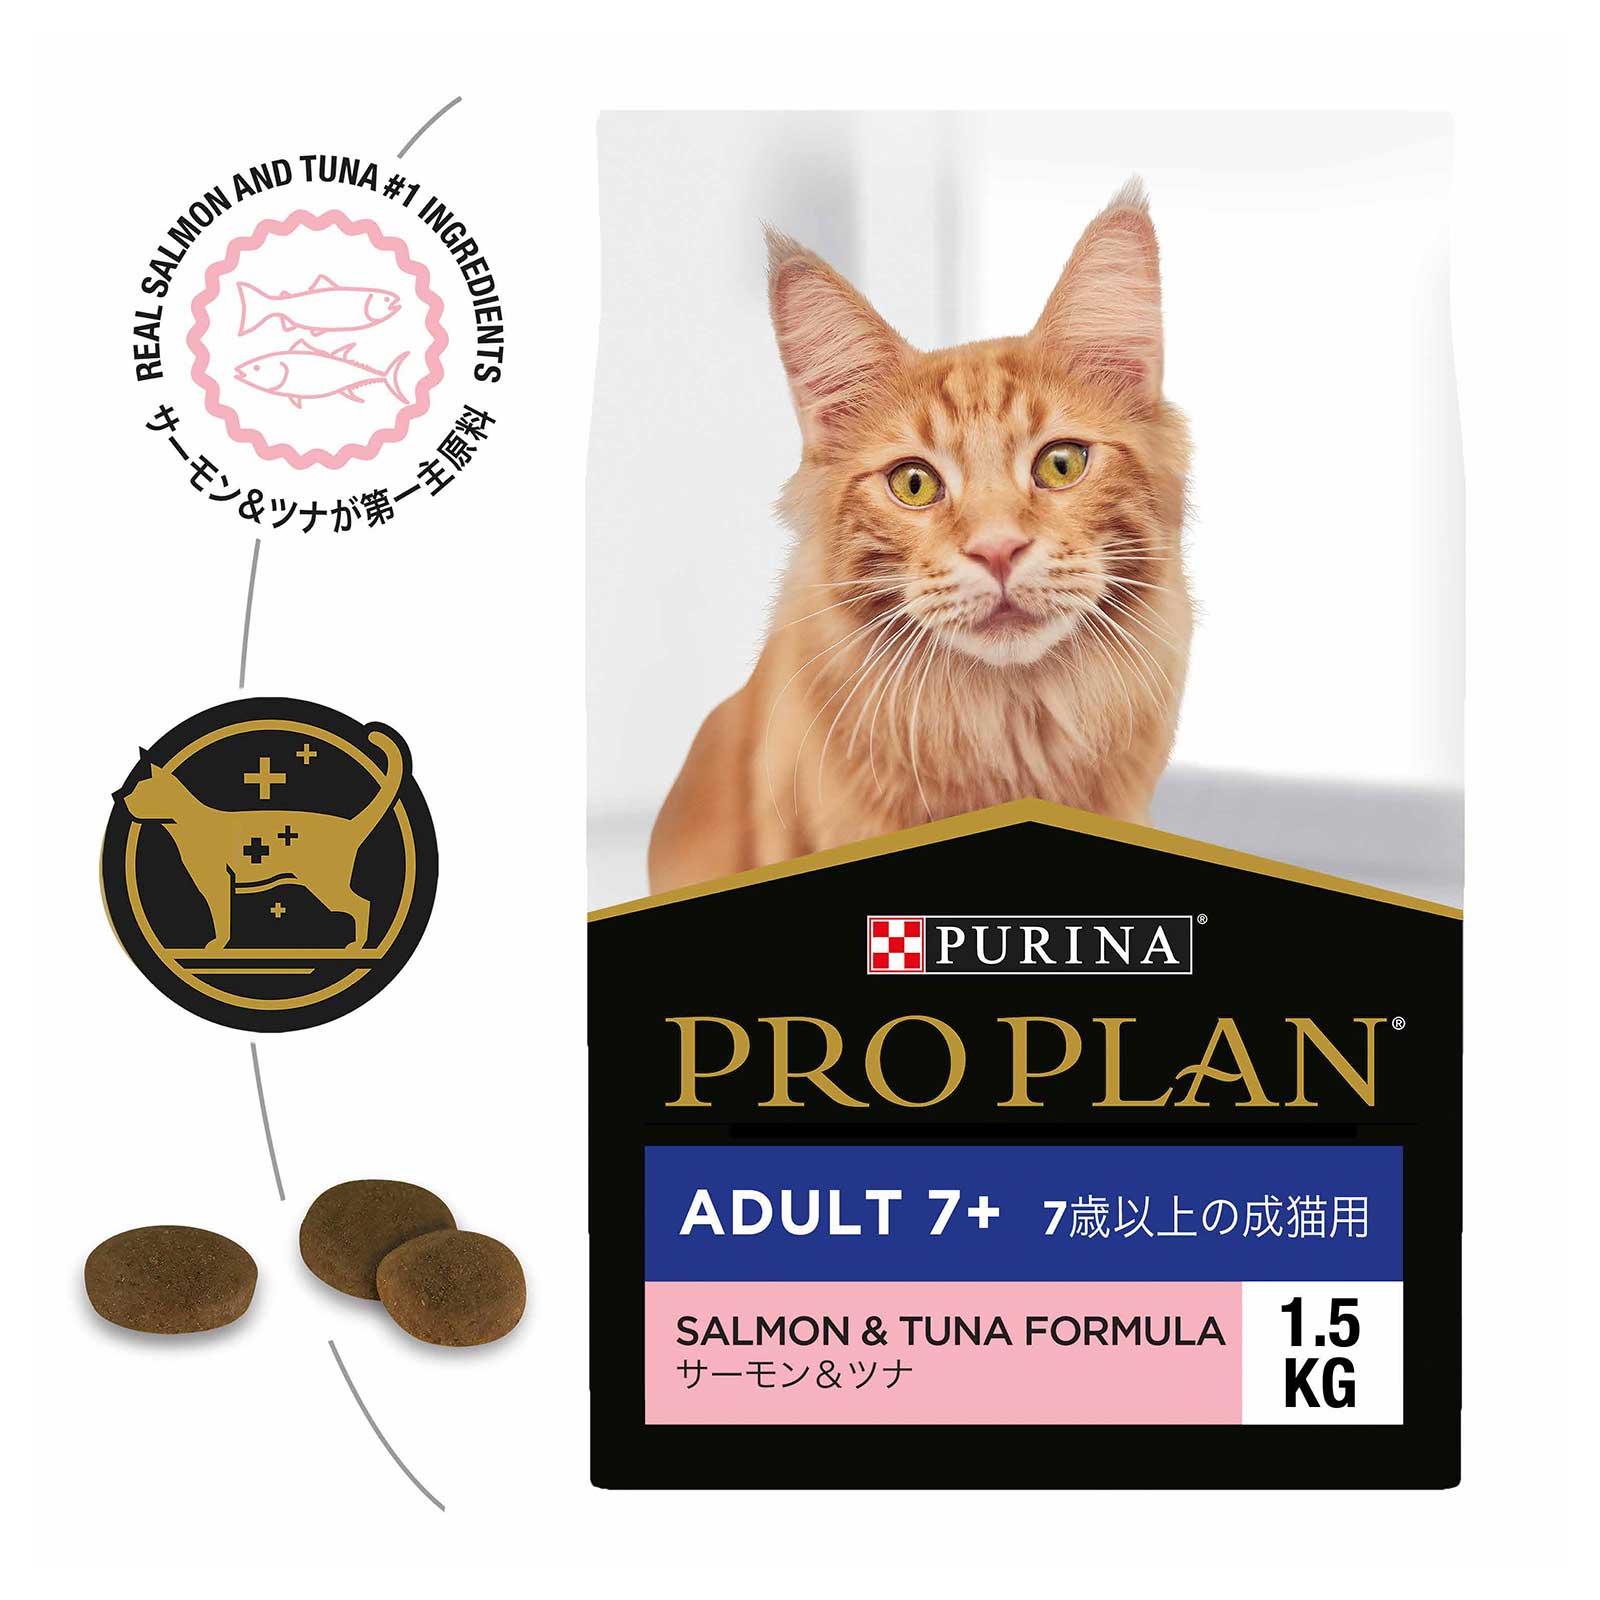 Pro Plan Cat Food Adult 7+ Salmon & Tuna